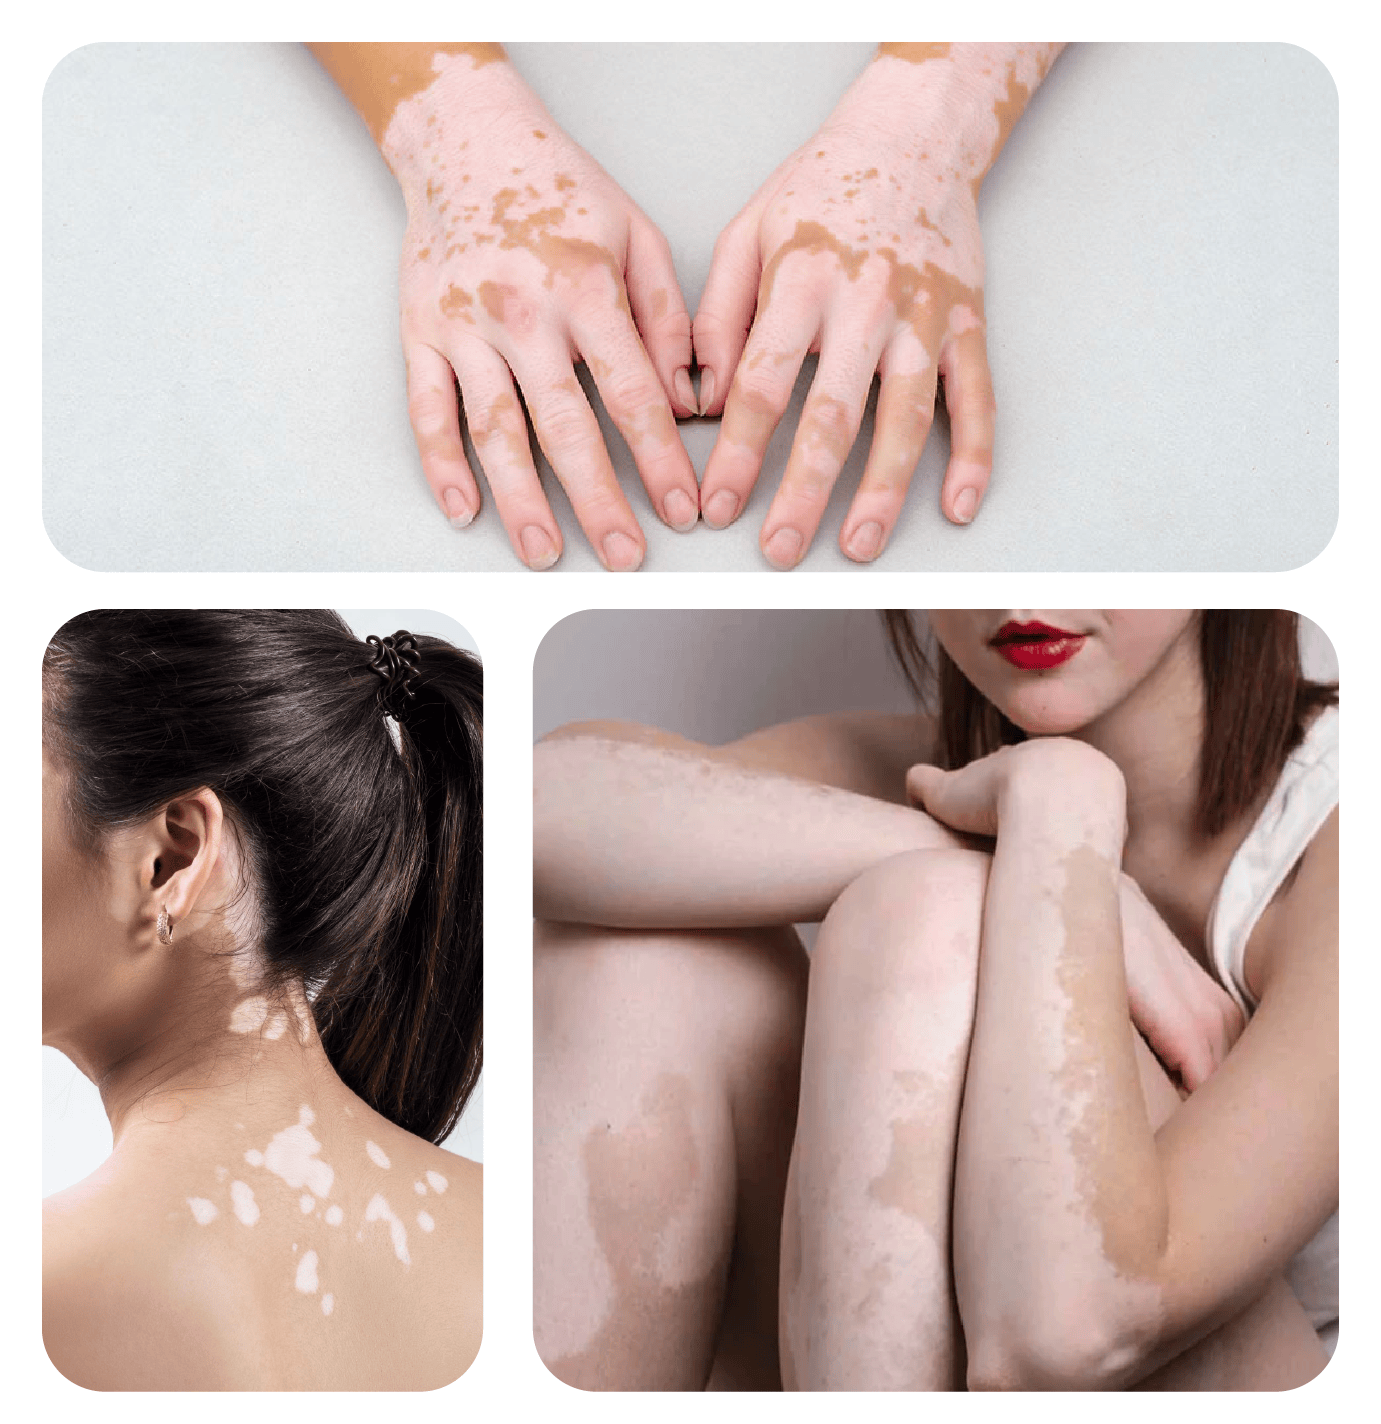 vitiligo causes